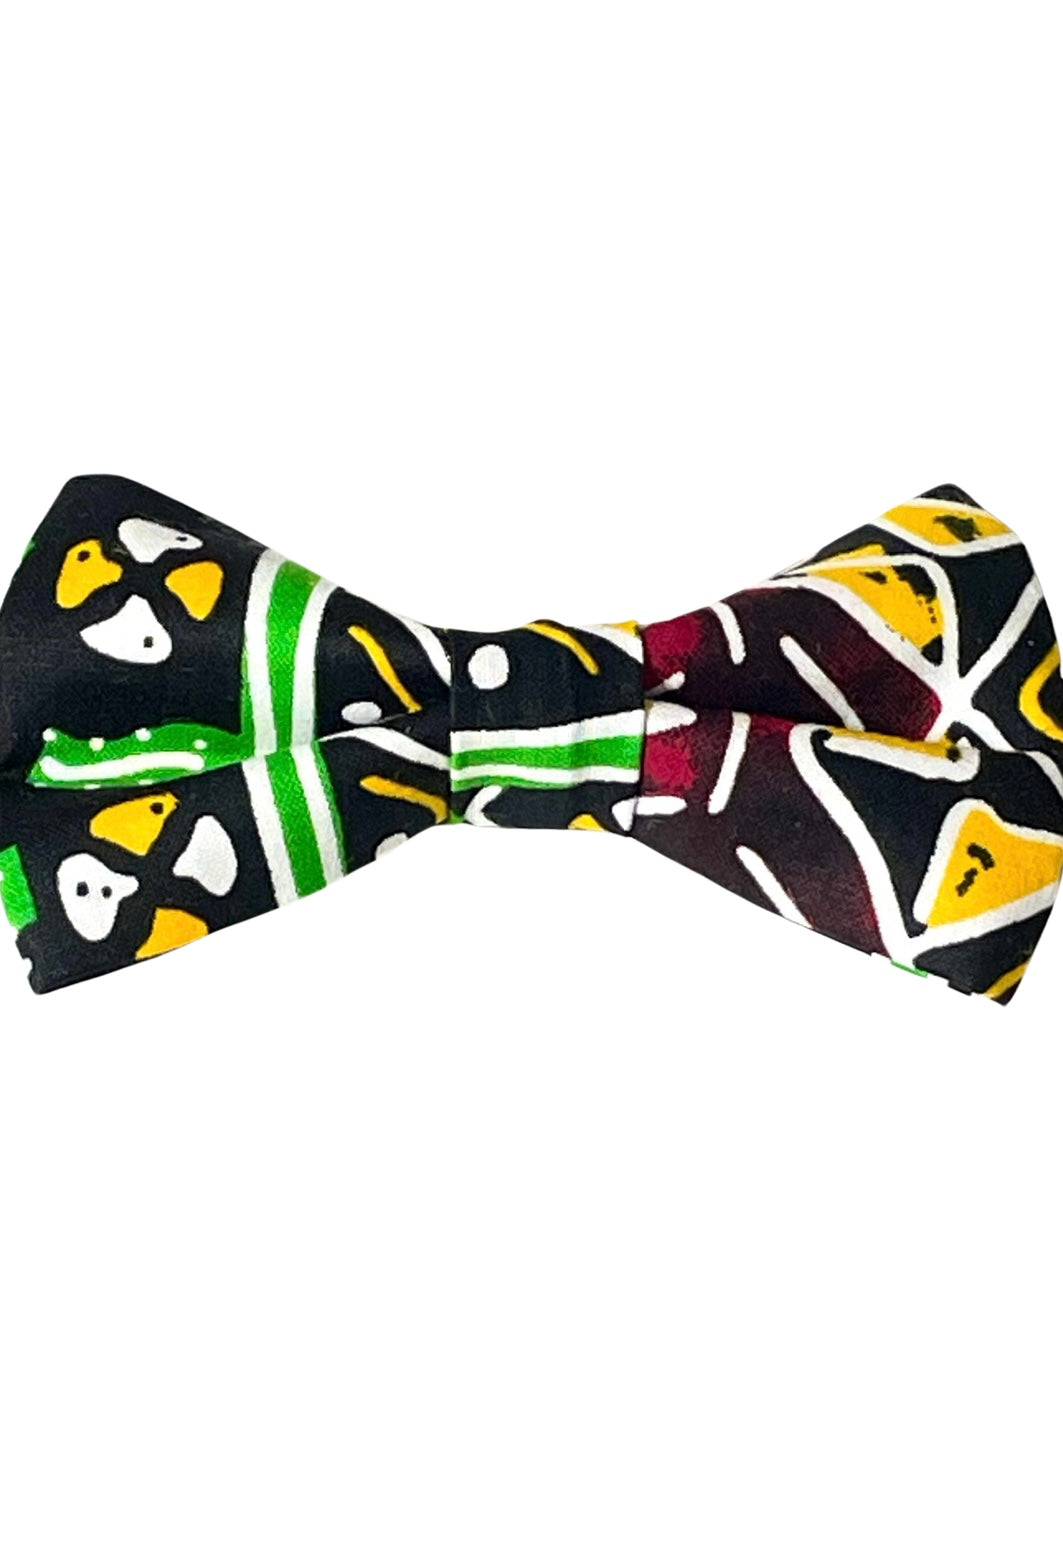 Black African Print Bow Tie